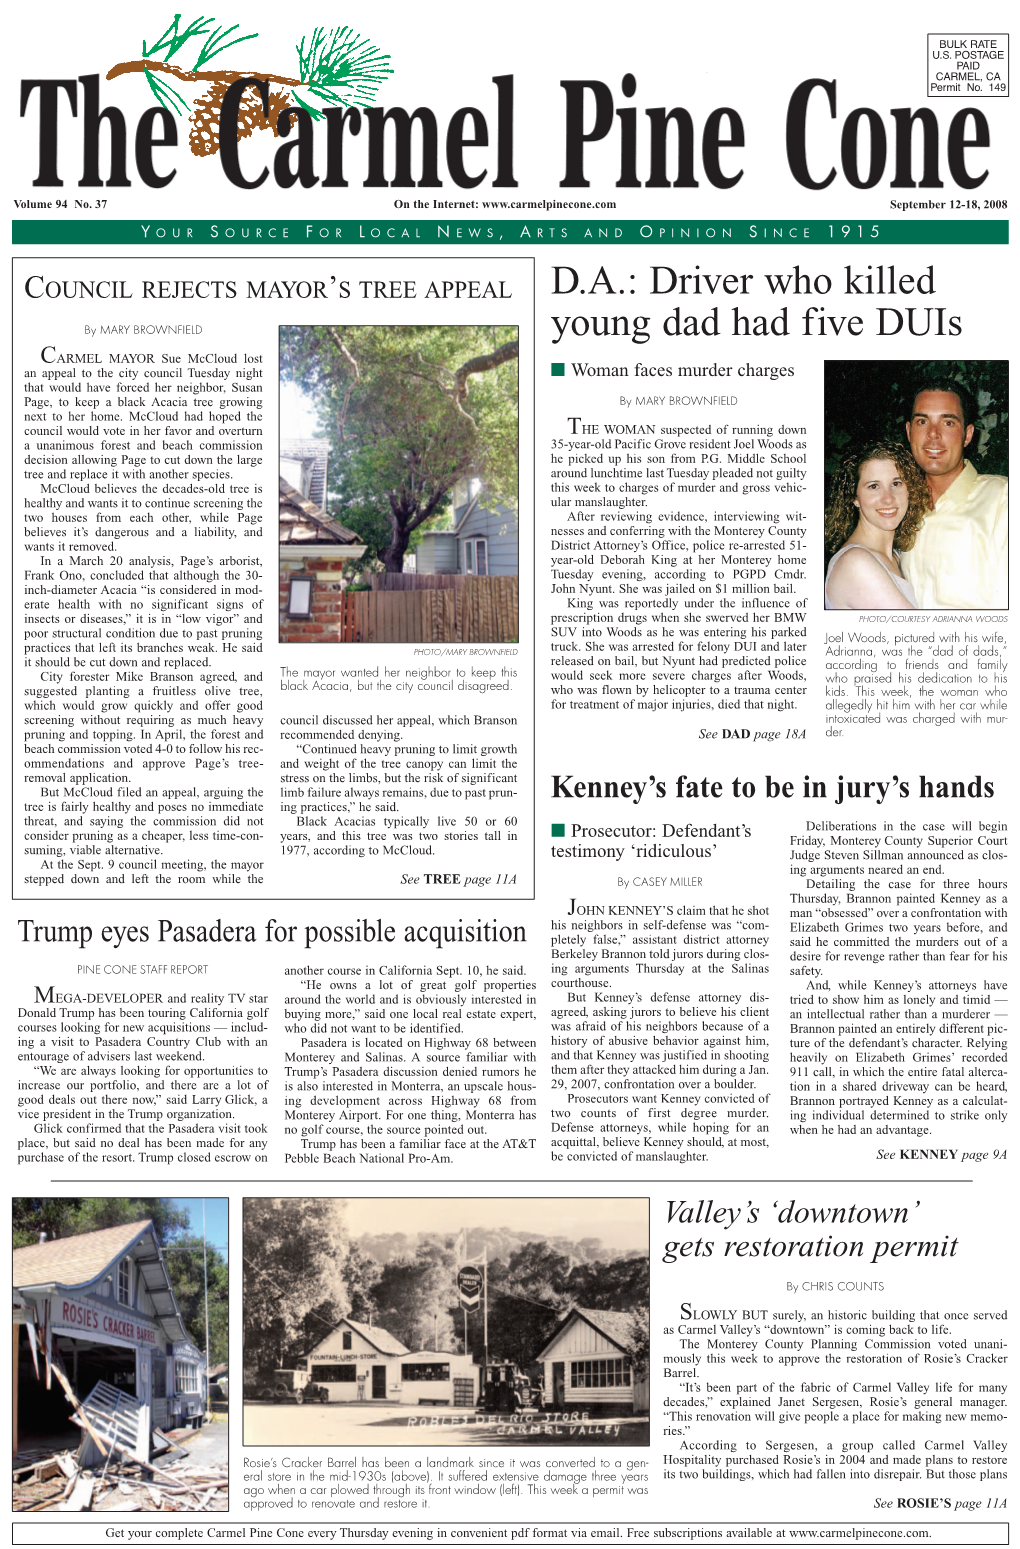 Carmel Pine Cone, September 12, 2008 (Main News)